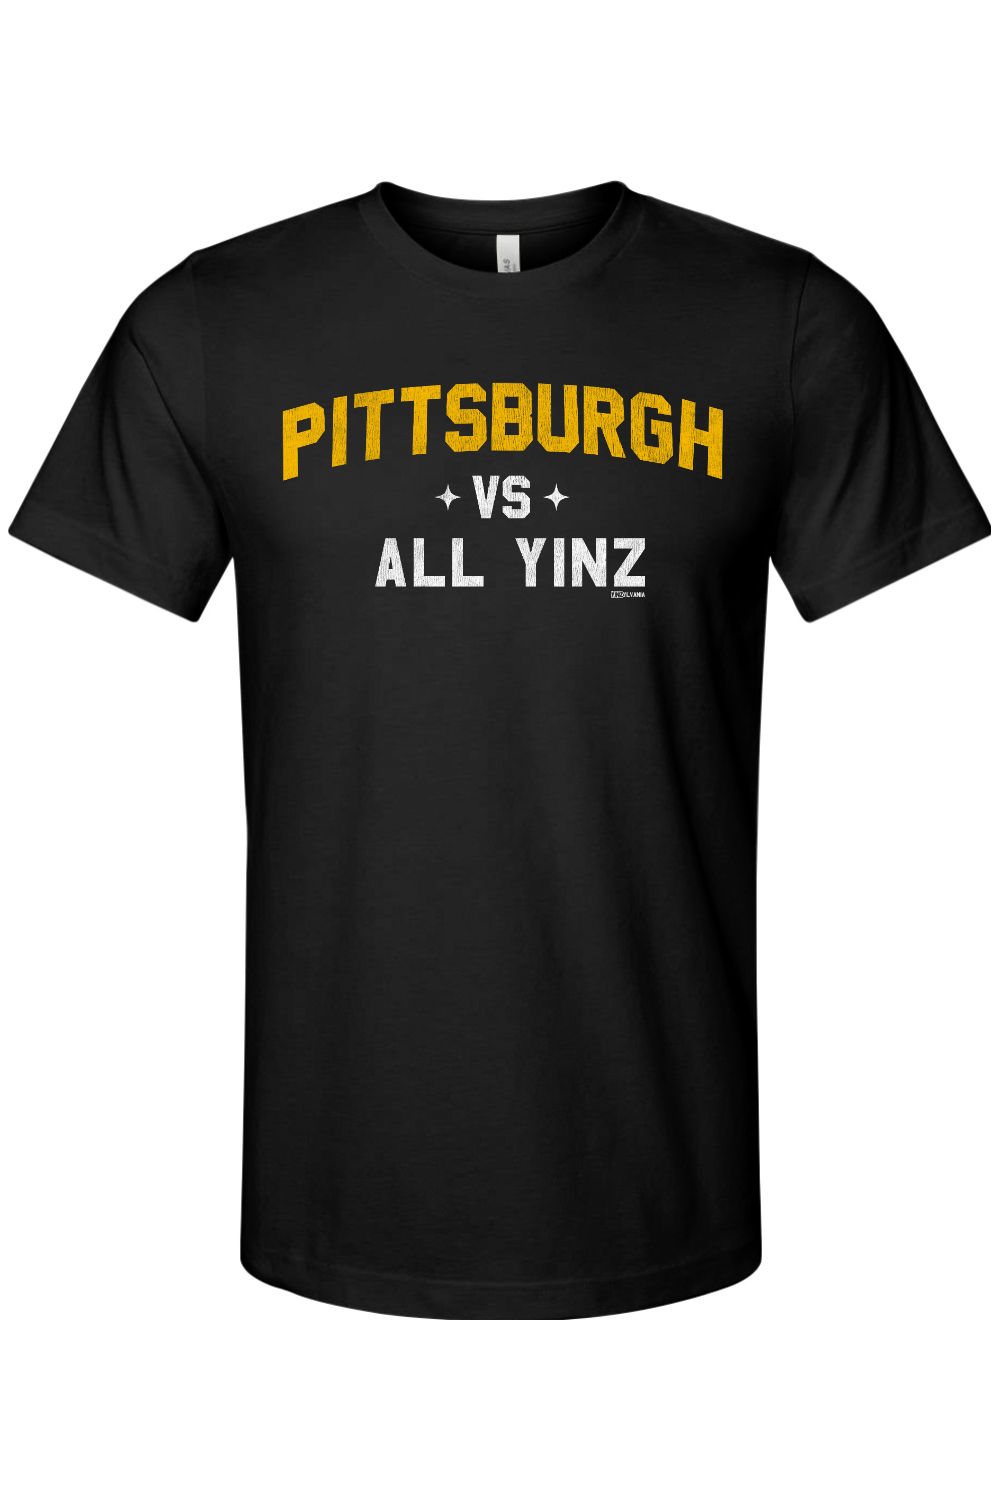 Pittsburgh vs. All Yinz - Bella + Canvas Jersey Tee Cotton - Yinzylvania